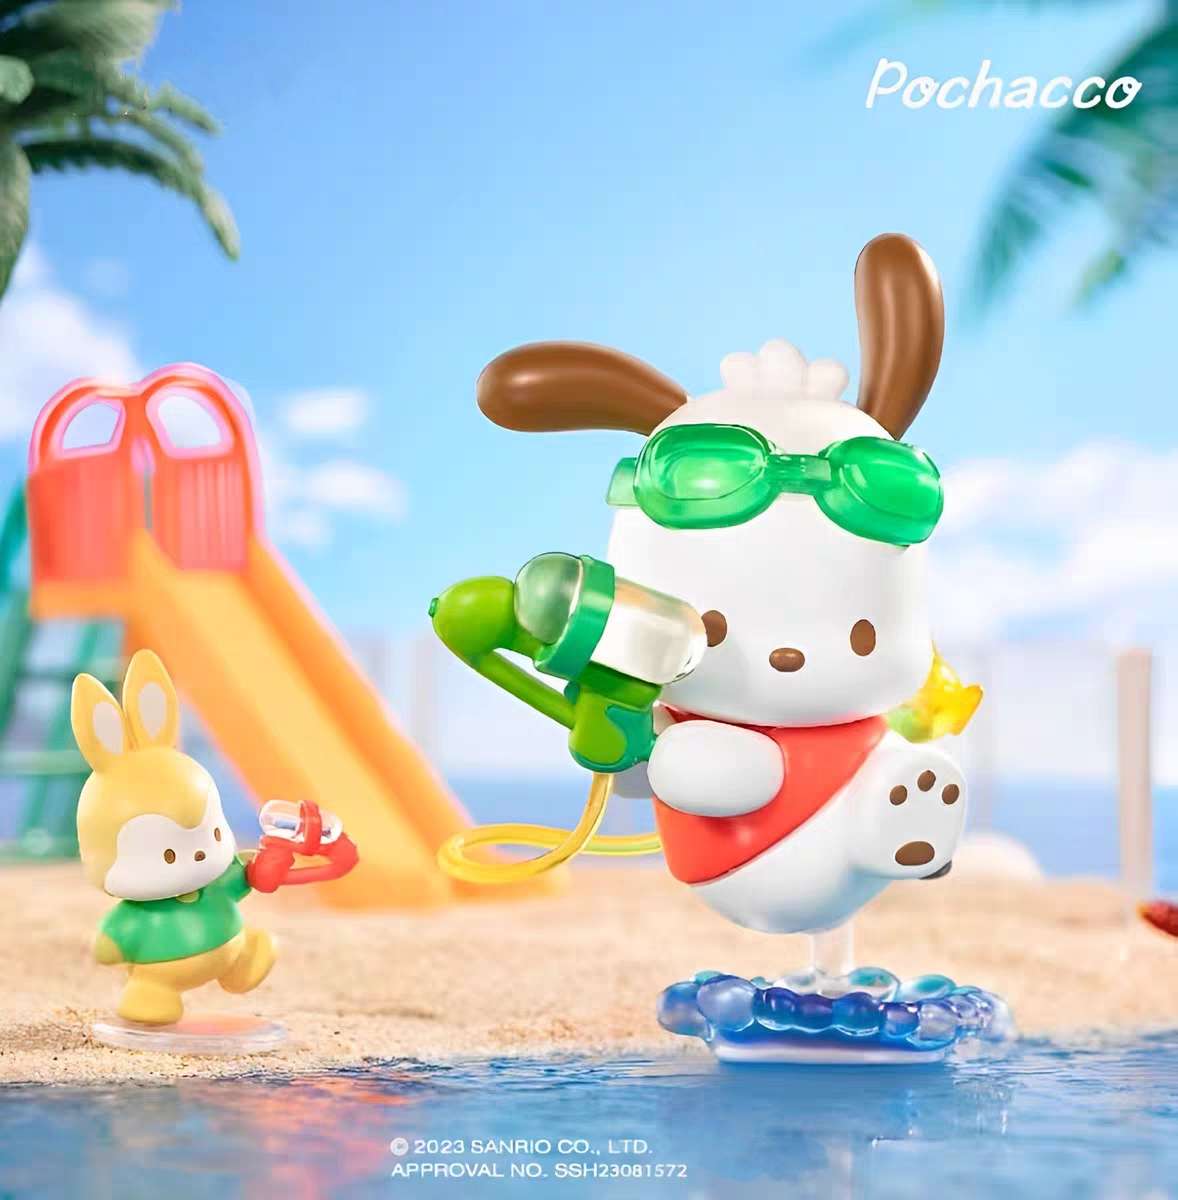 Sanrio Pochacco Beach Party Blind Box Toy Figures